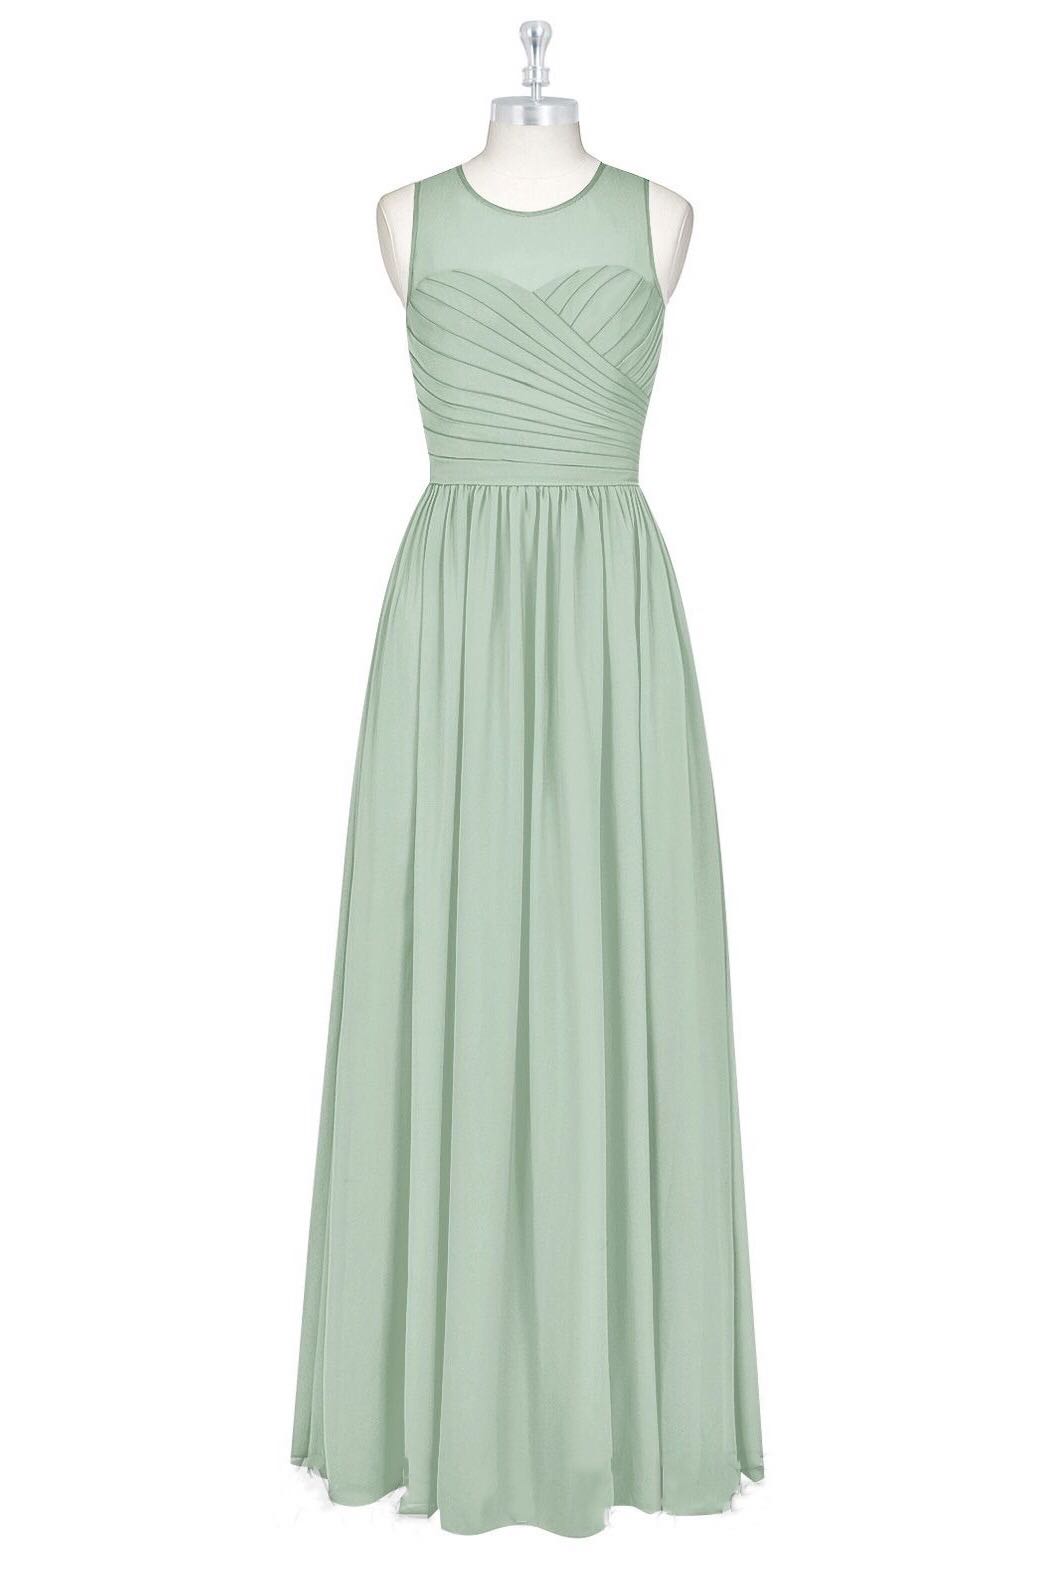 Formal Dresses For Teen, Sage Green Chiffon Sheer Neck A-Line Long Bridesmaid Dress